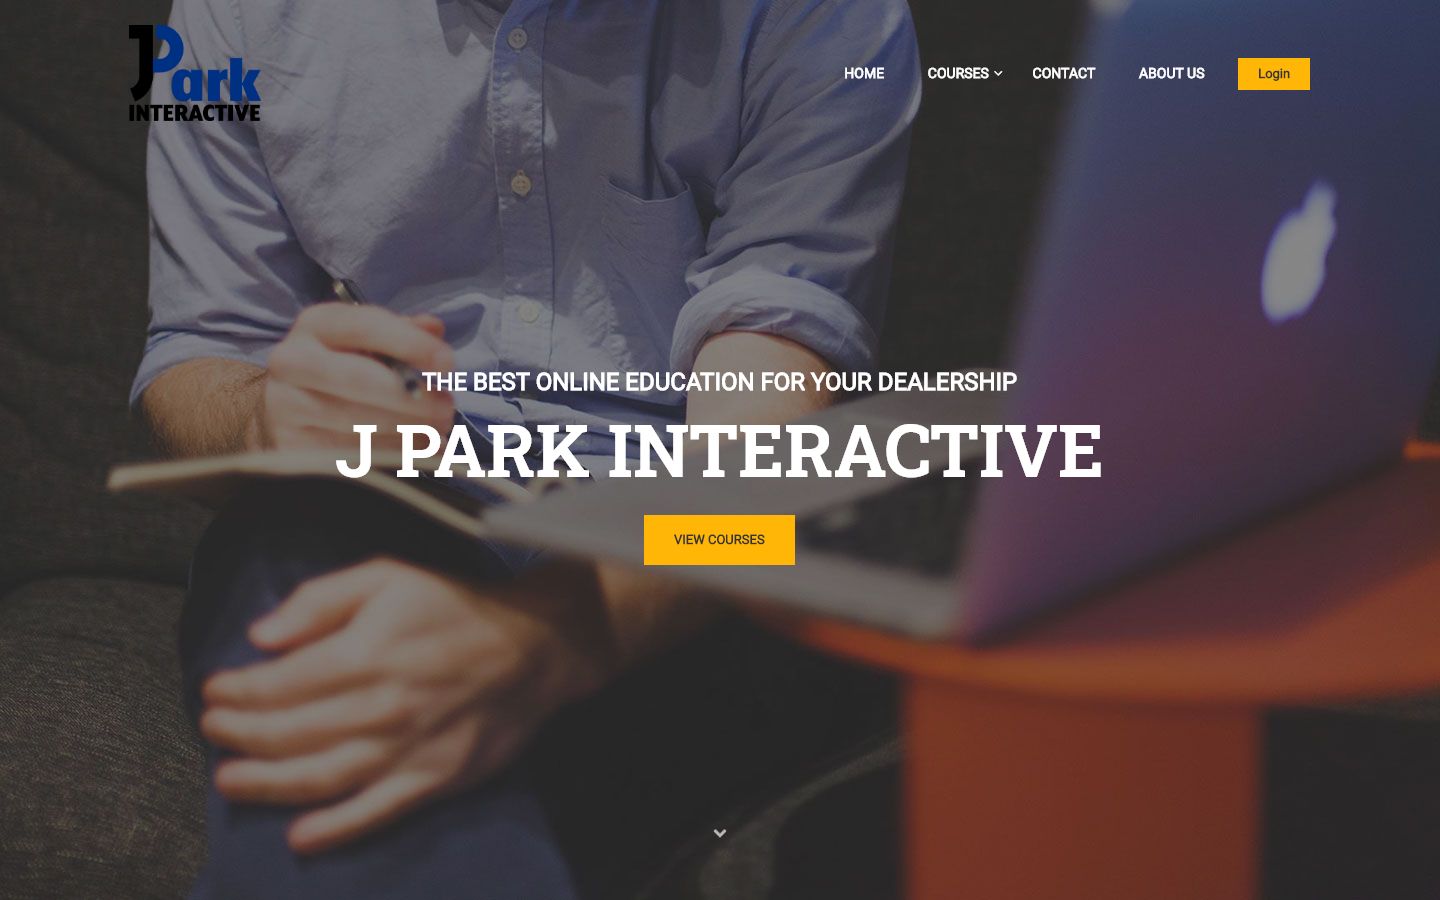 JPark Interactive